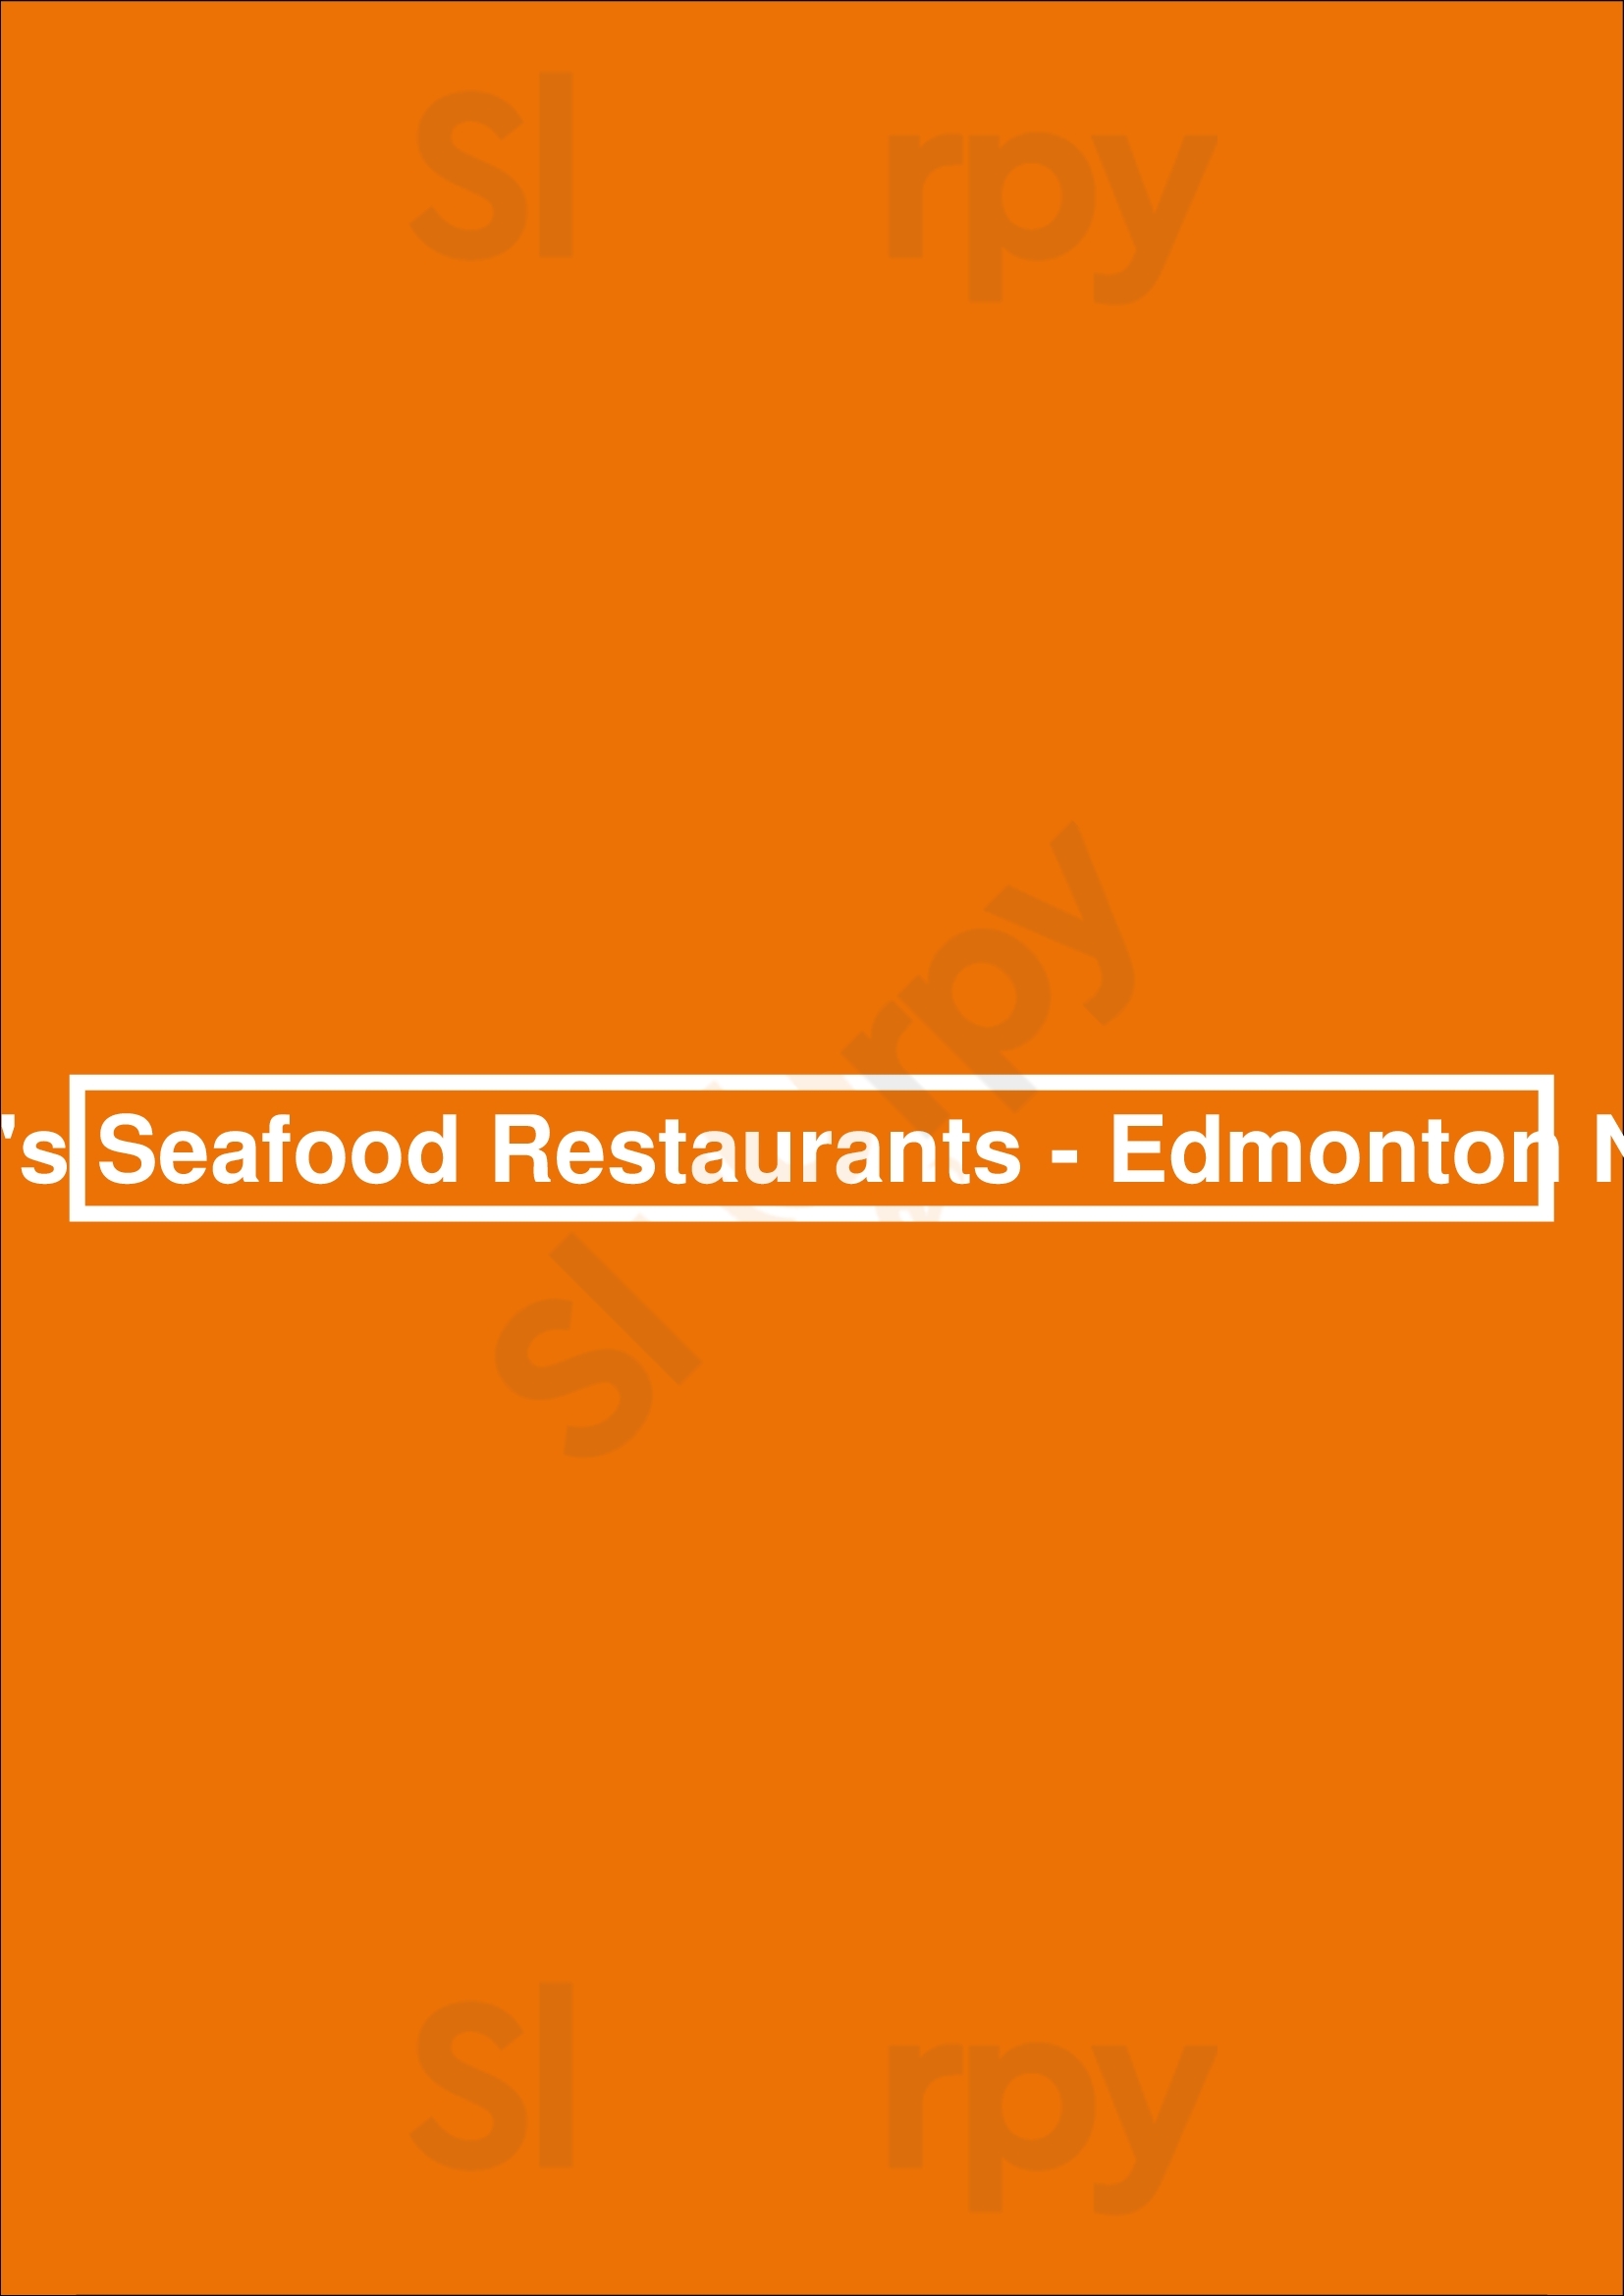 Joey's Seafood Restaurants - Edmonton North Edmonton Menu - 1